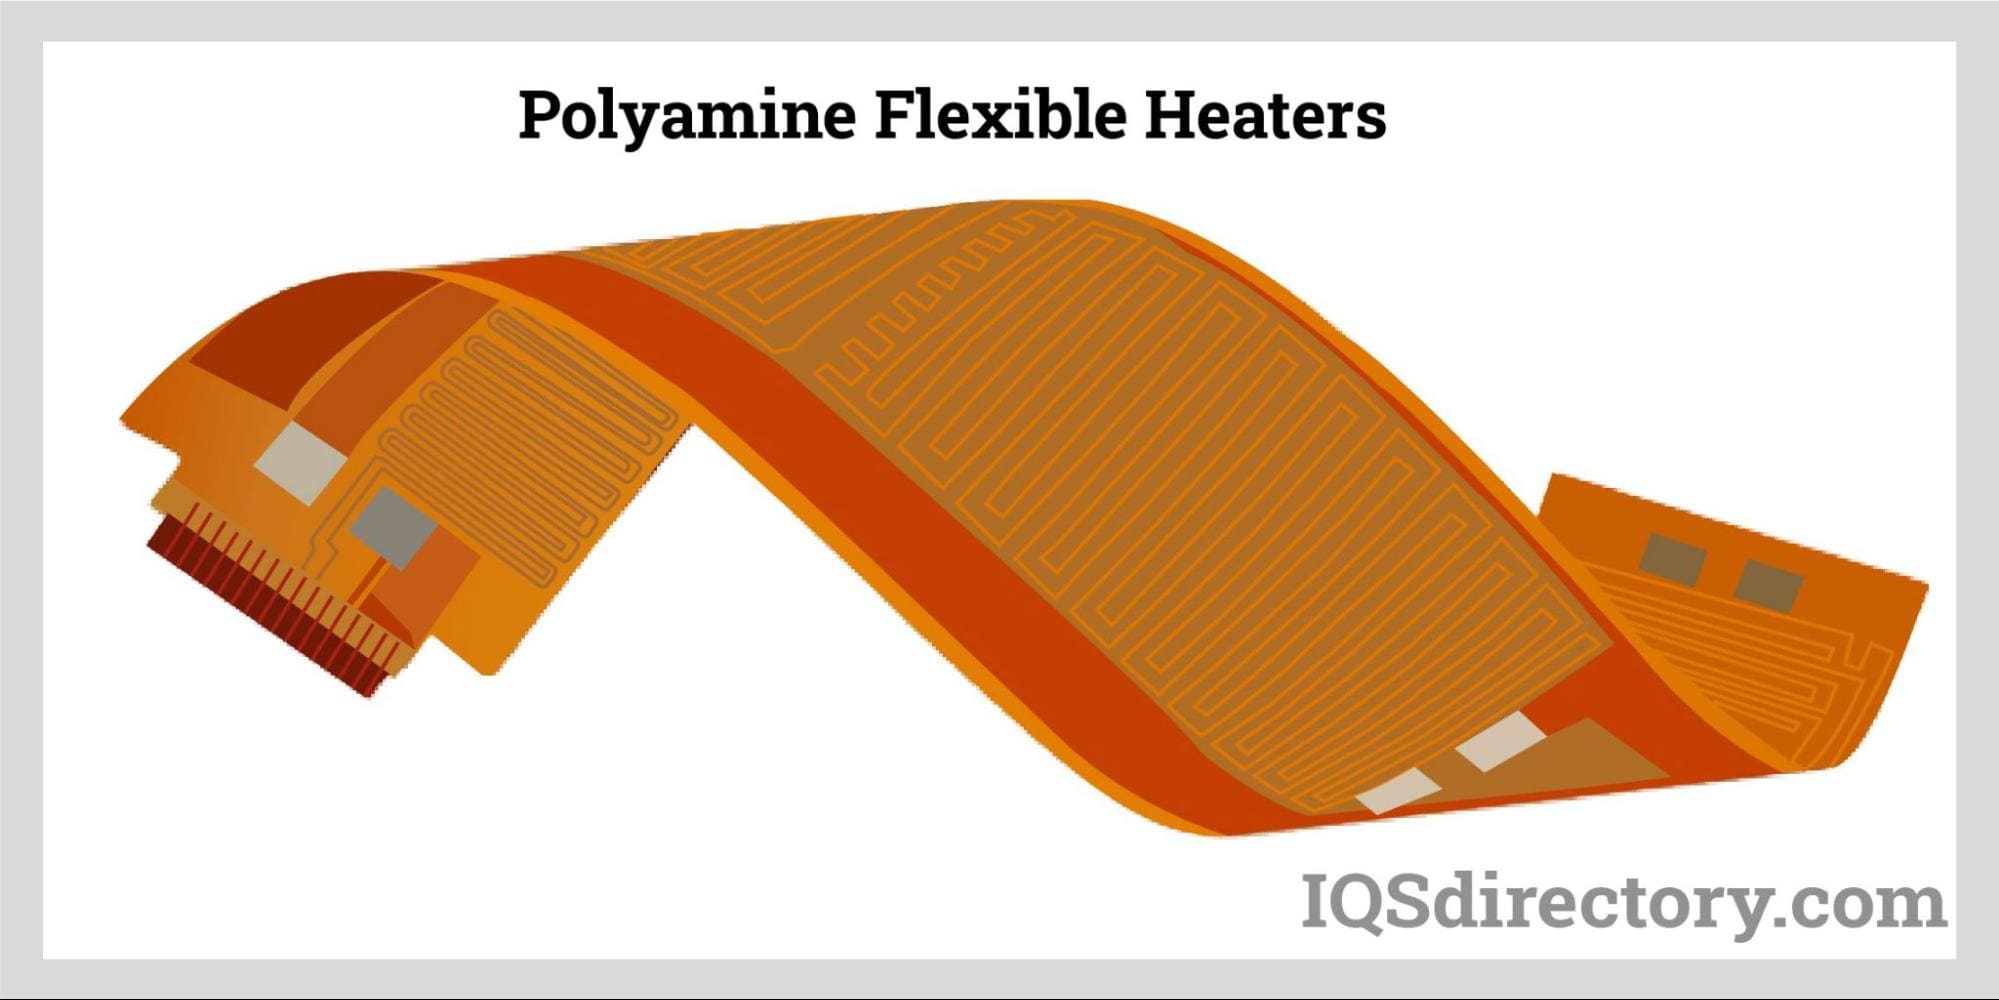 Polyamine Flexible Heaters